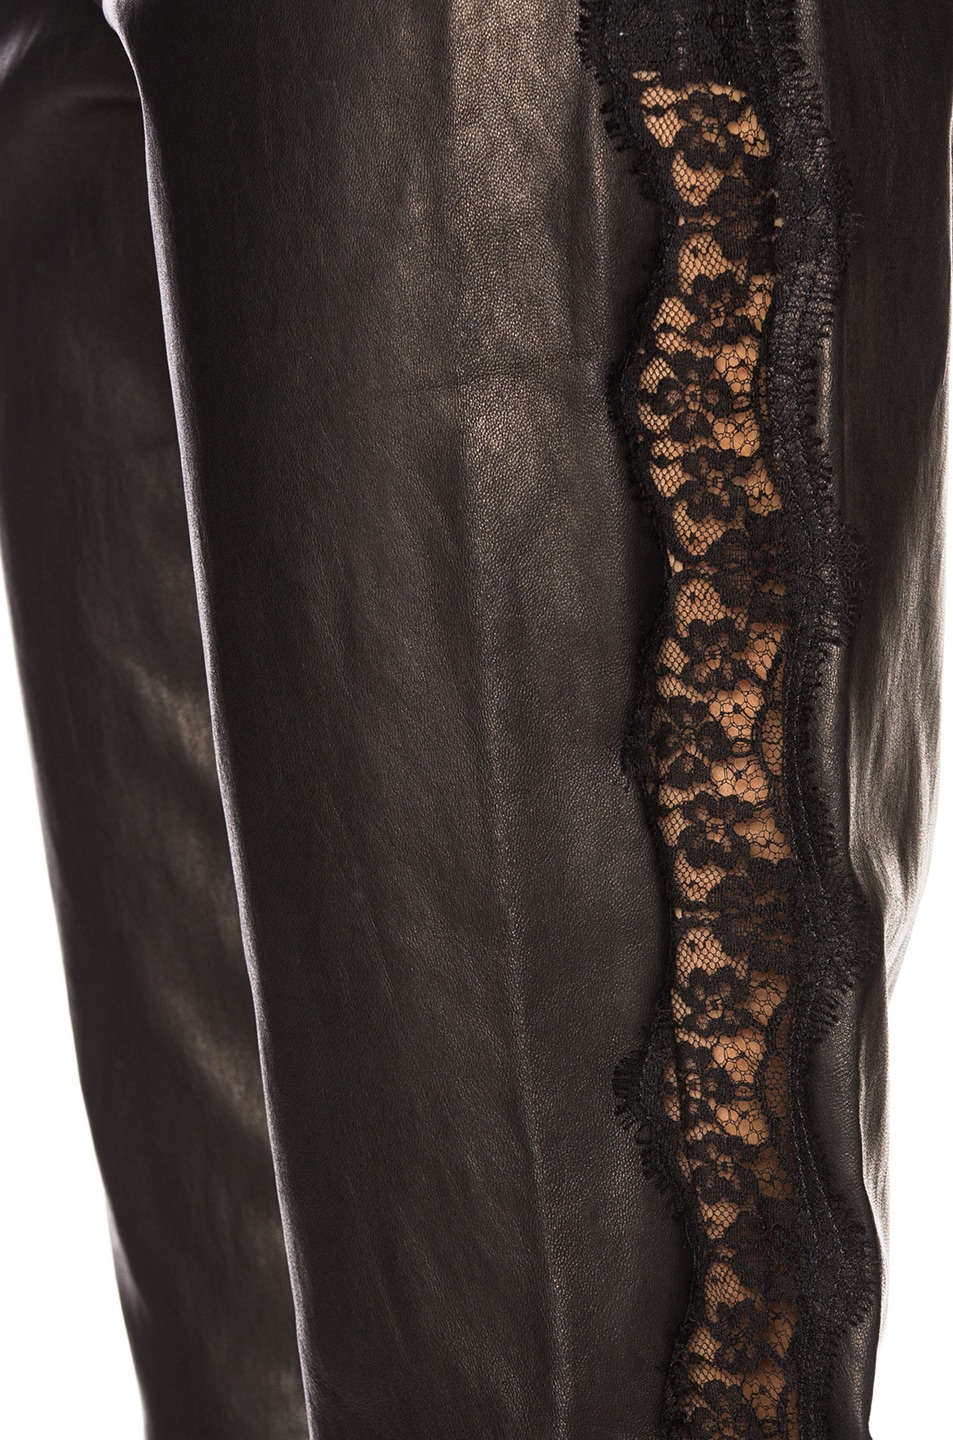 fleur du mal Tailored Leather Pant in Black | FWRD